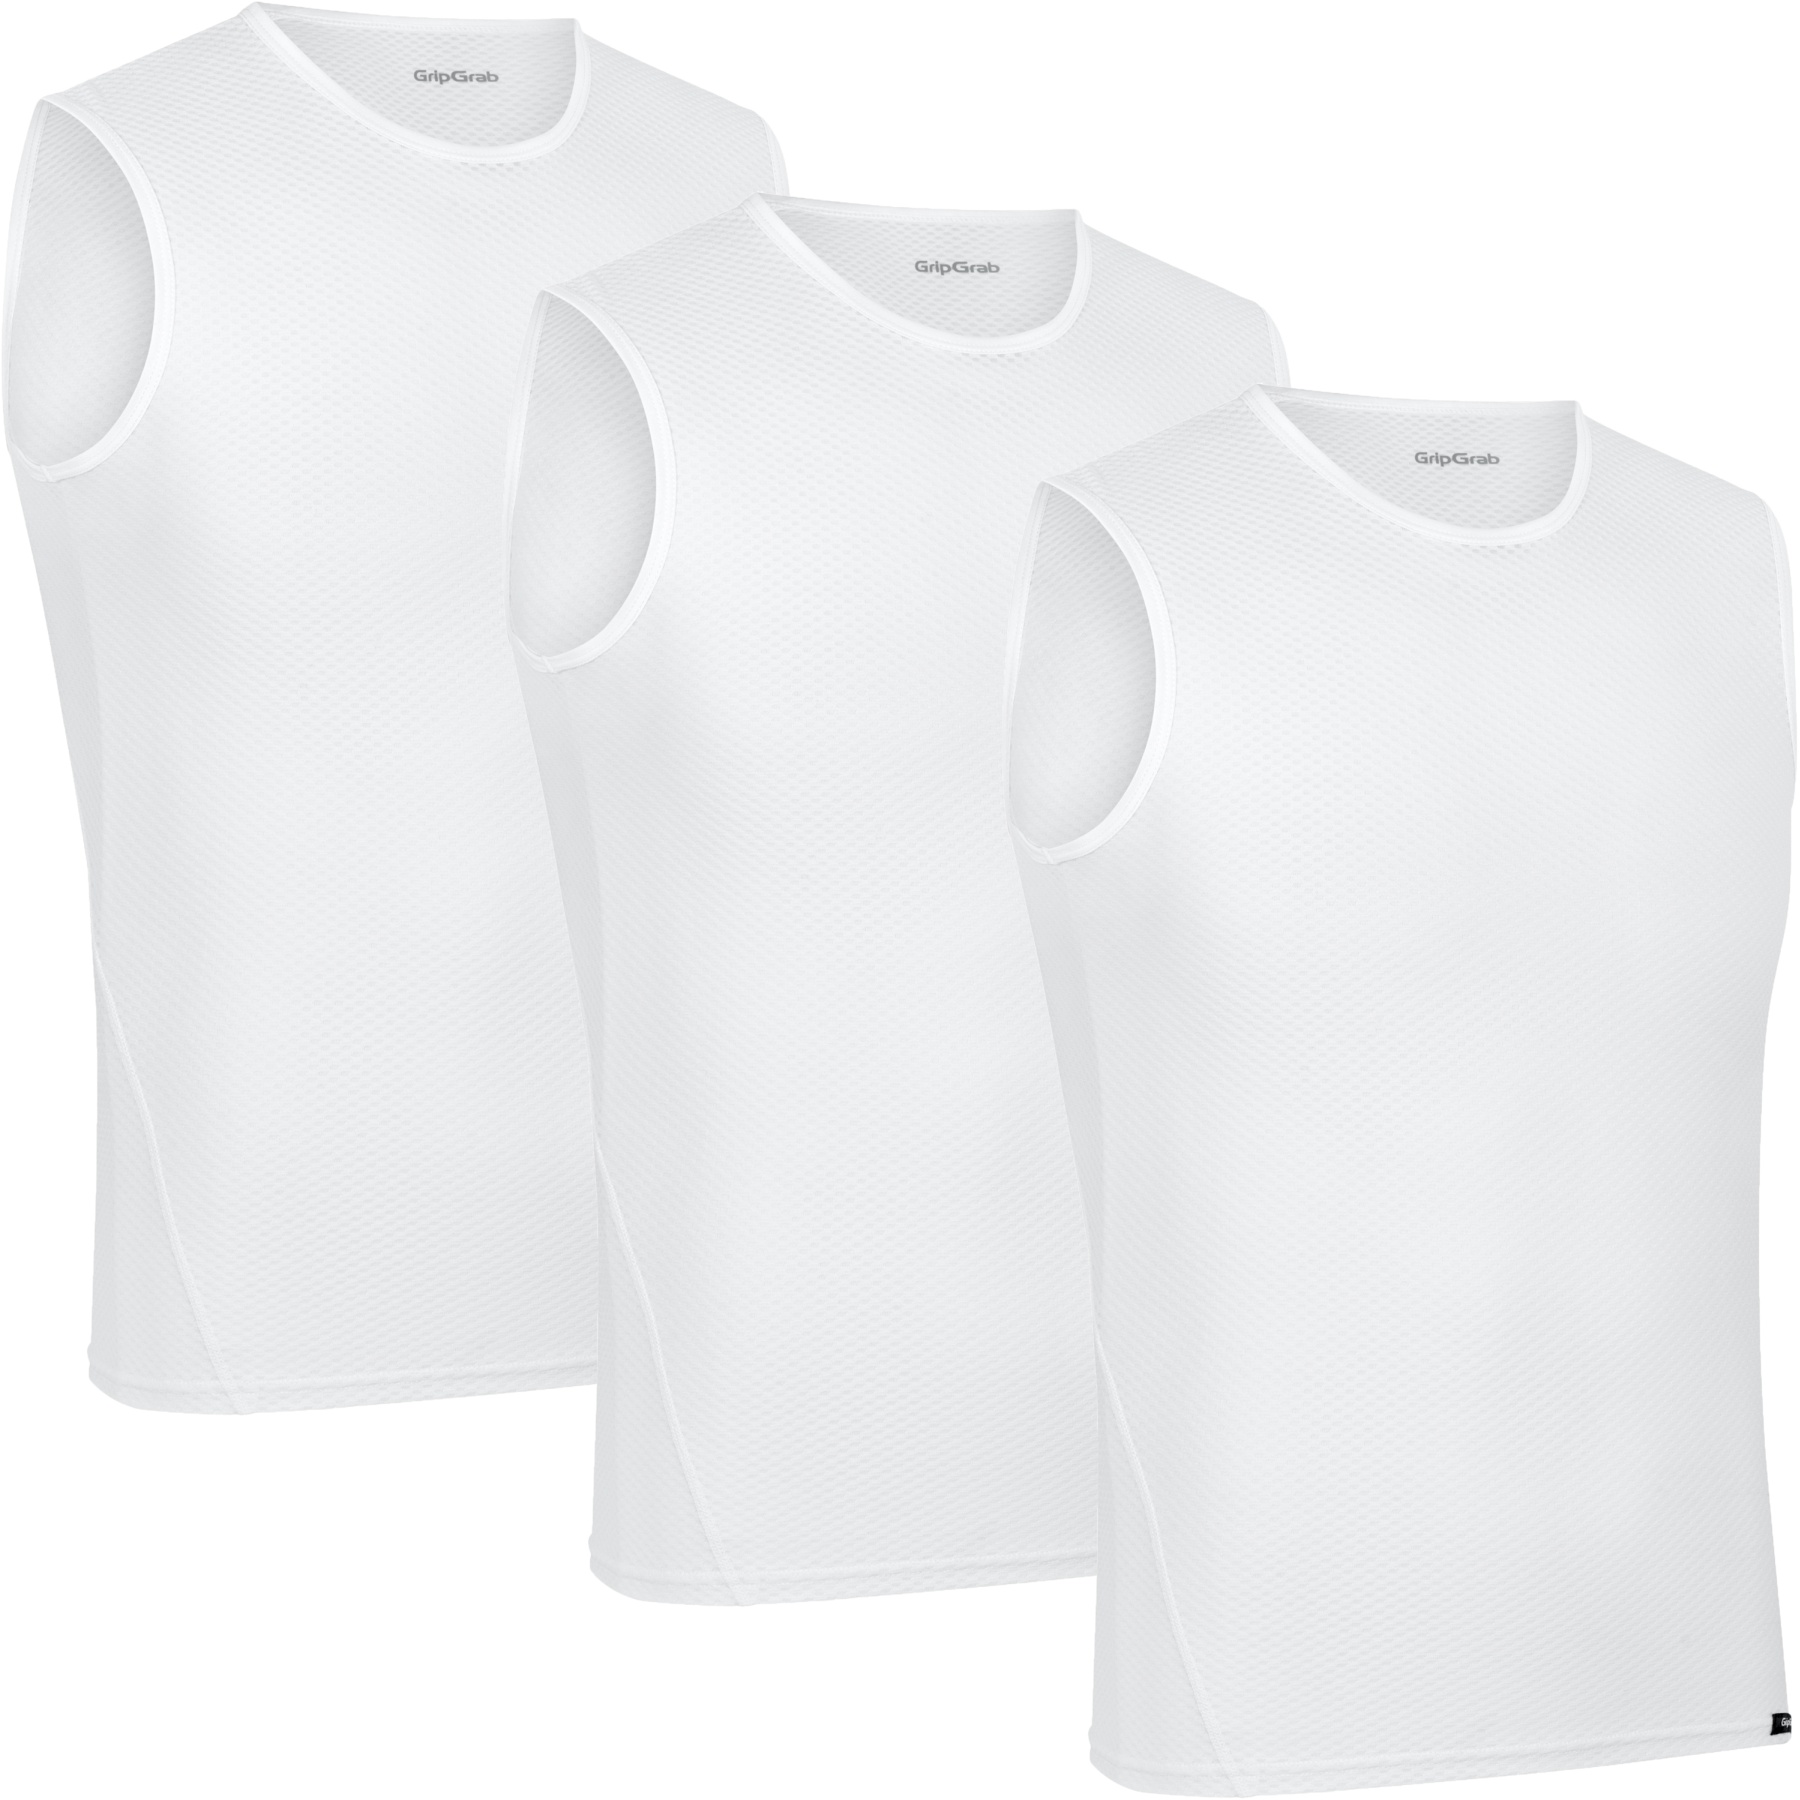 Productfoto van GripGrab Ultralight Mesh Mouwloos Vest Heren 3PACK - White